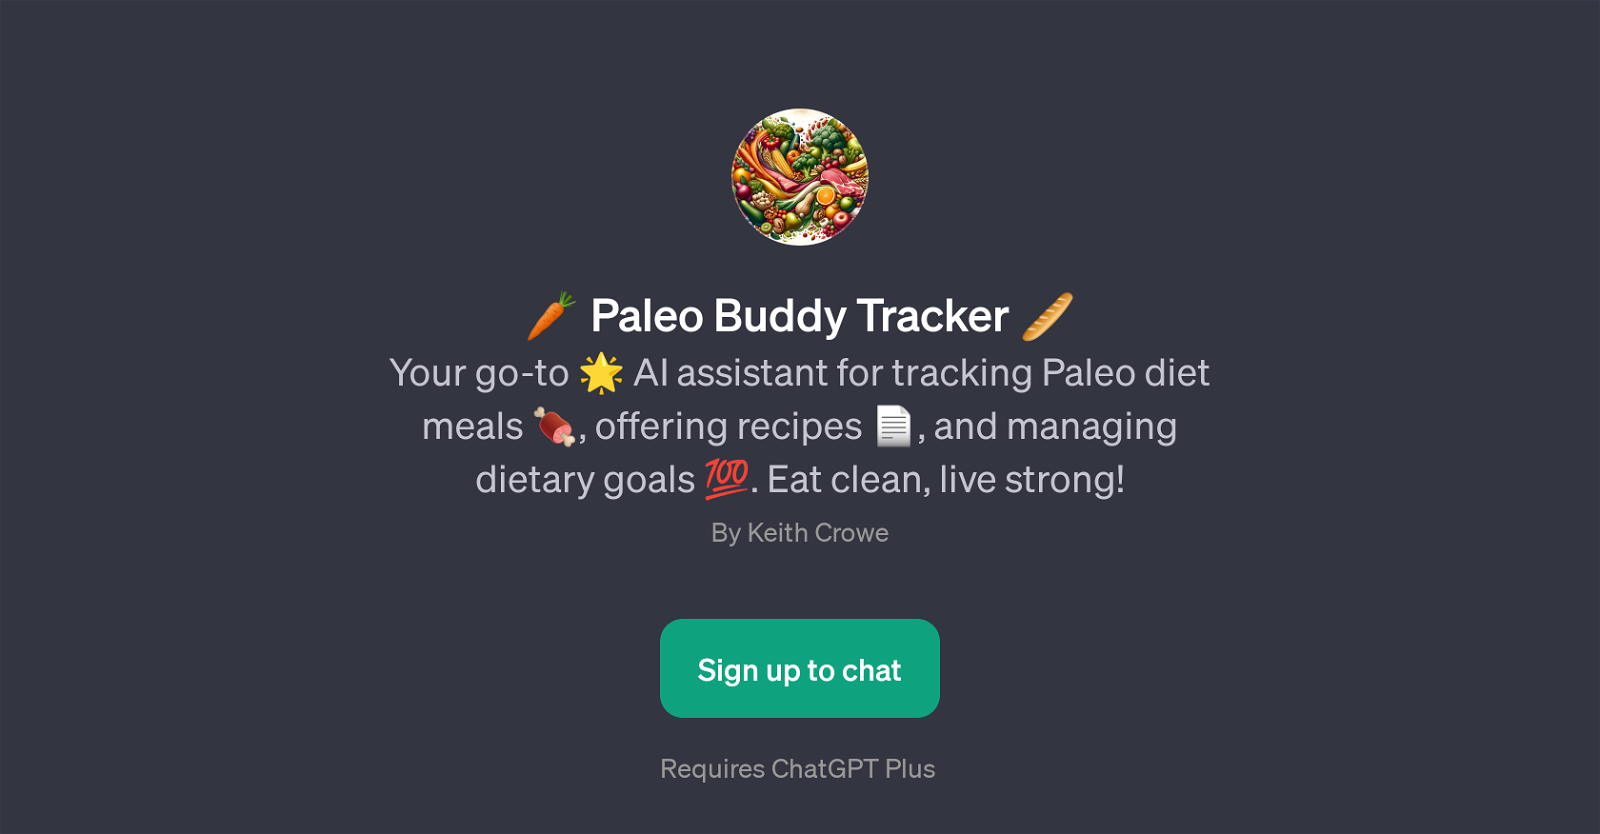 Paleo Buddy Tracker website